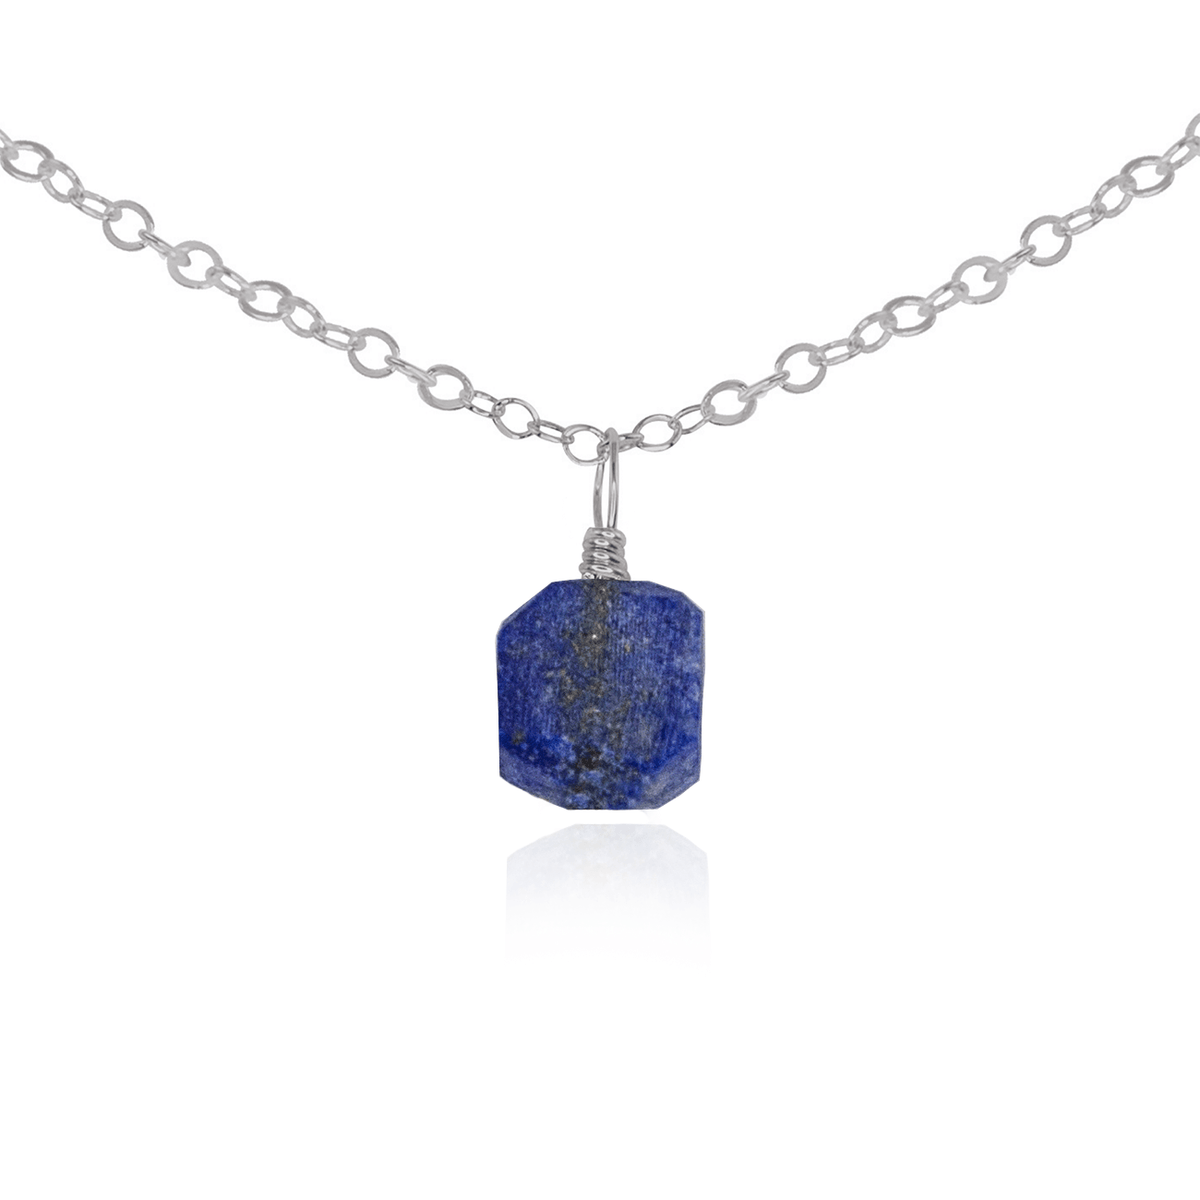 Tiny Rough Lapis Lazuli Gemstone Pendant Choker - Tiny Rough Lapis Lazuli Gemstone Pendant Choker - Stainless Steel / Cable - Luna Tide Handmade Crystal Jewellery